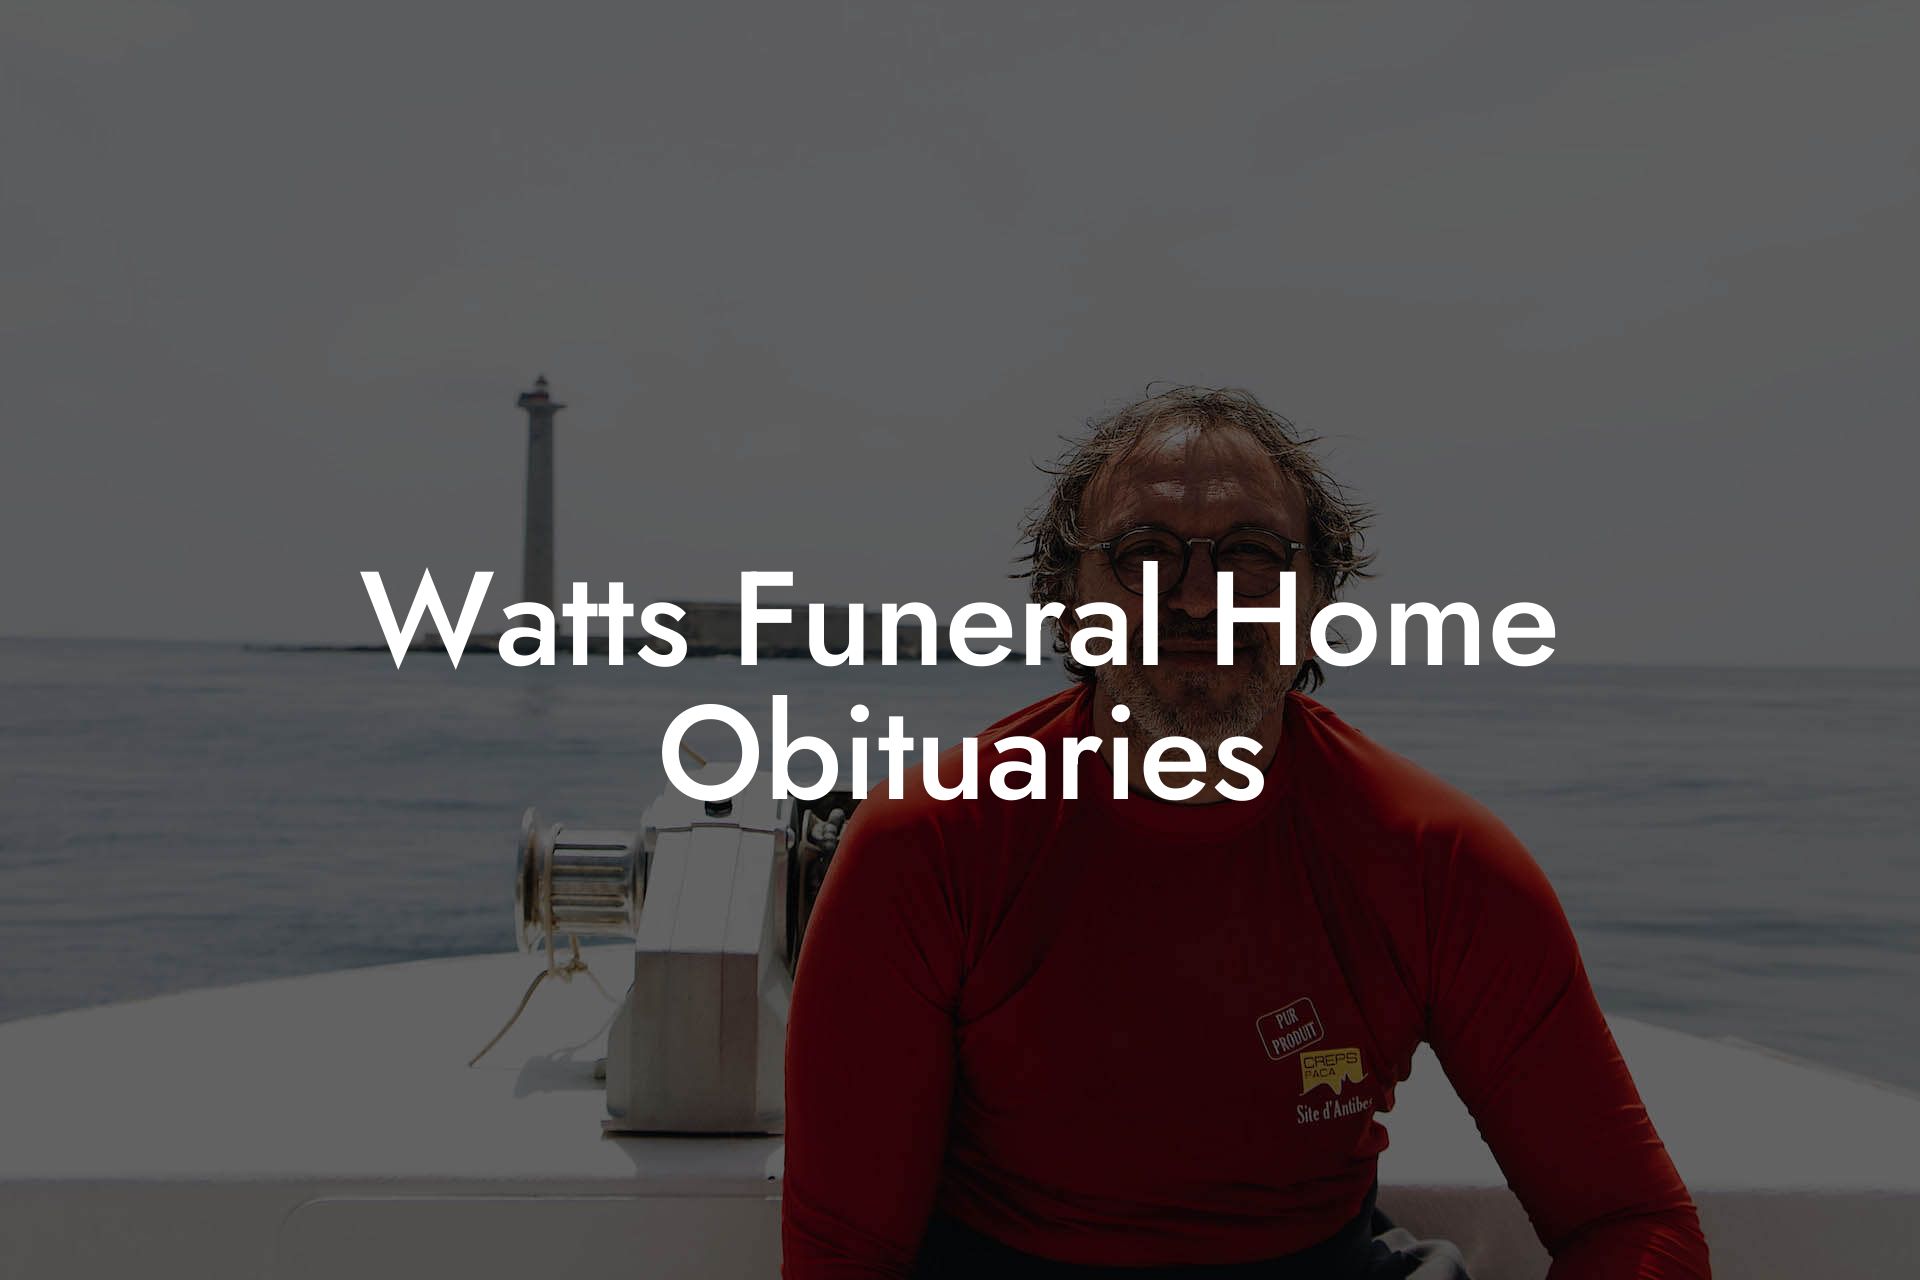 Watts Funeral Home Obituaries